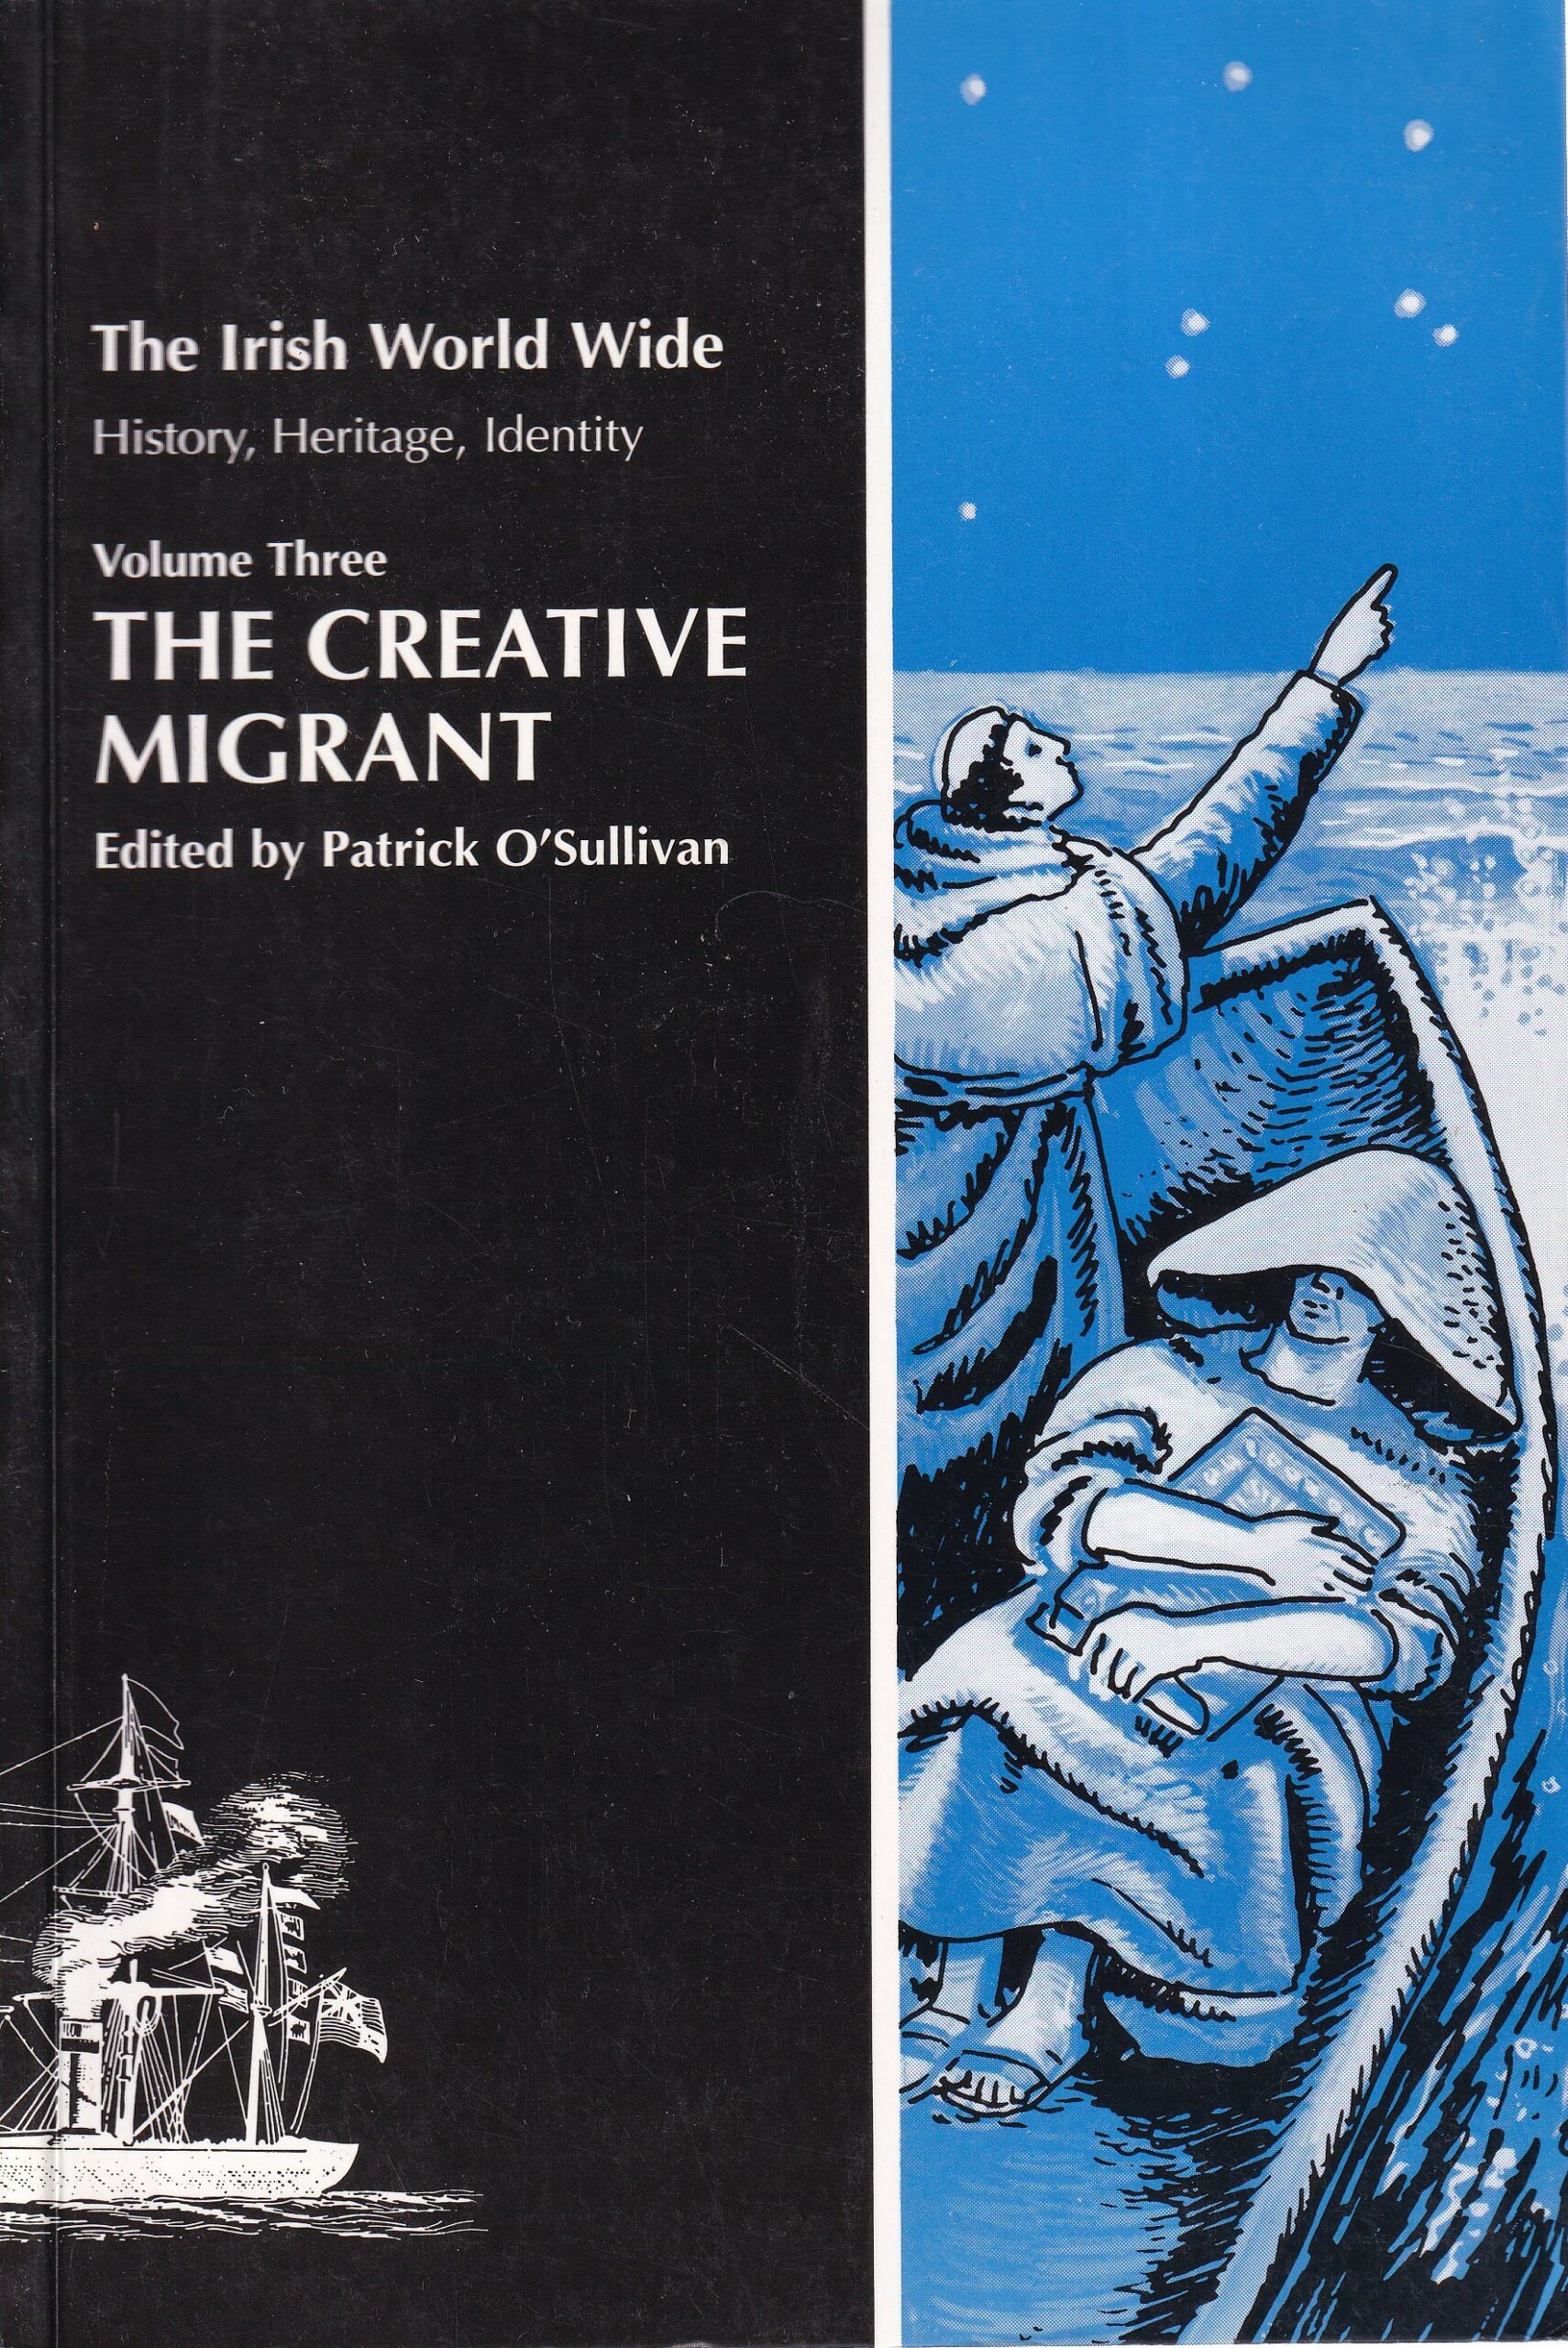 The Creative Migrant: The Irish World Wide Vol lll | Patrick O'Sullivan (ed.) | Charlie Byrne's